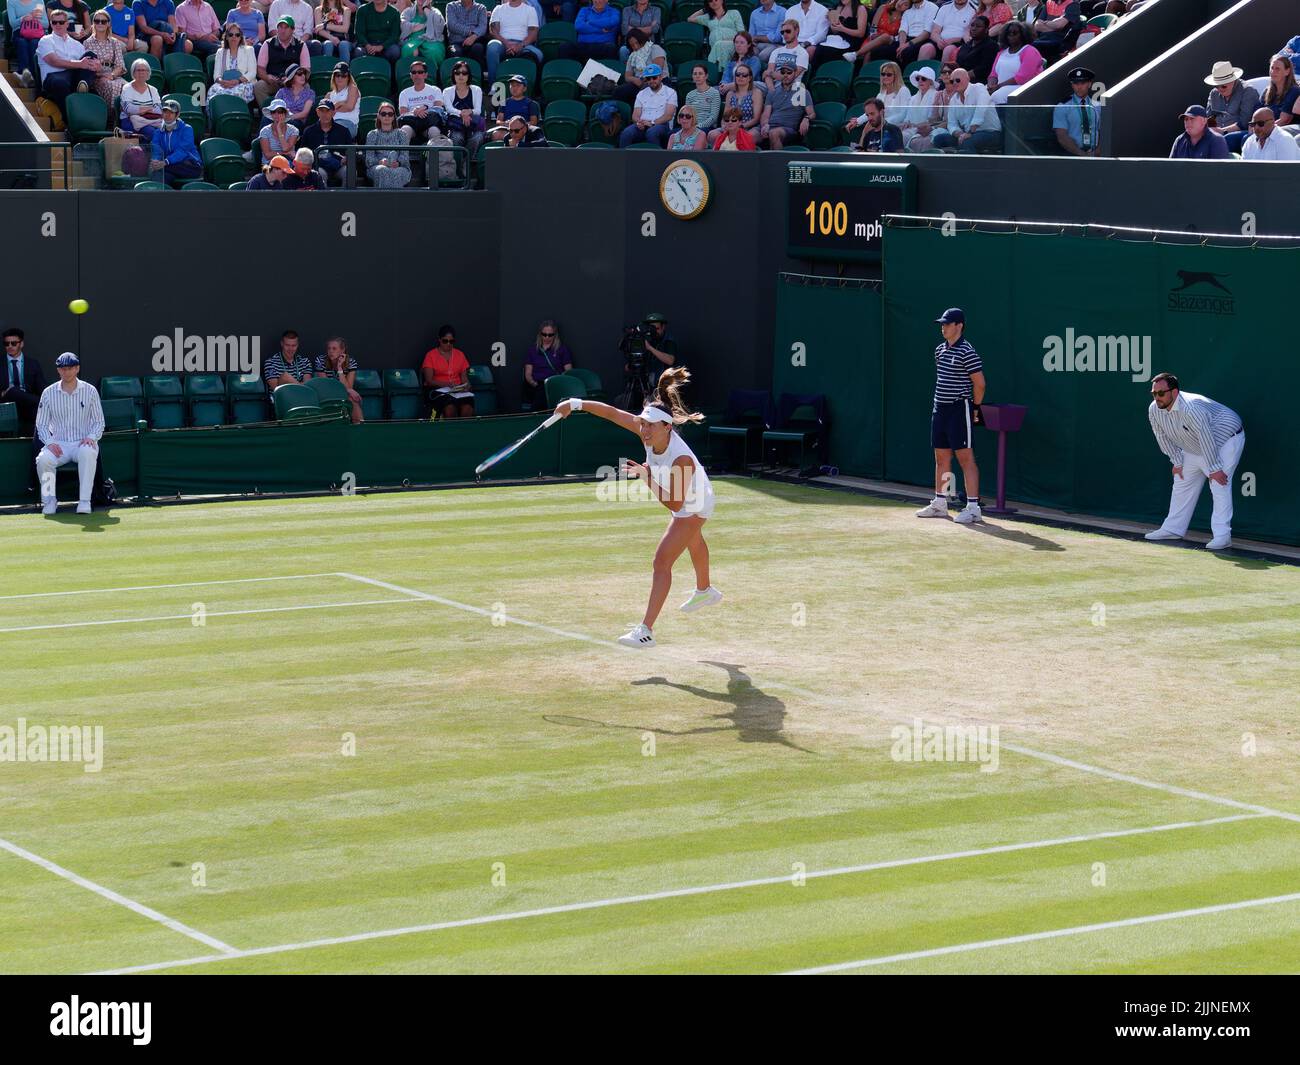 Wimbledon, Grand Londres, Angleterre, 02 juillet 2022: Championnat de tennis de Wimbledon. Jessica Pegula servant pendant un match. Banque D'Images